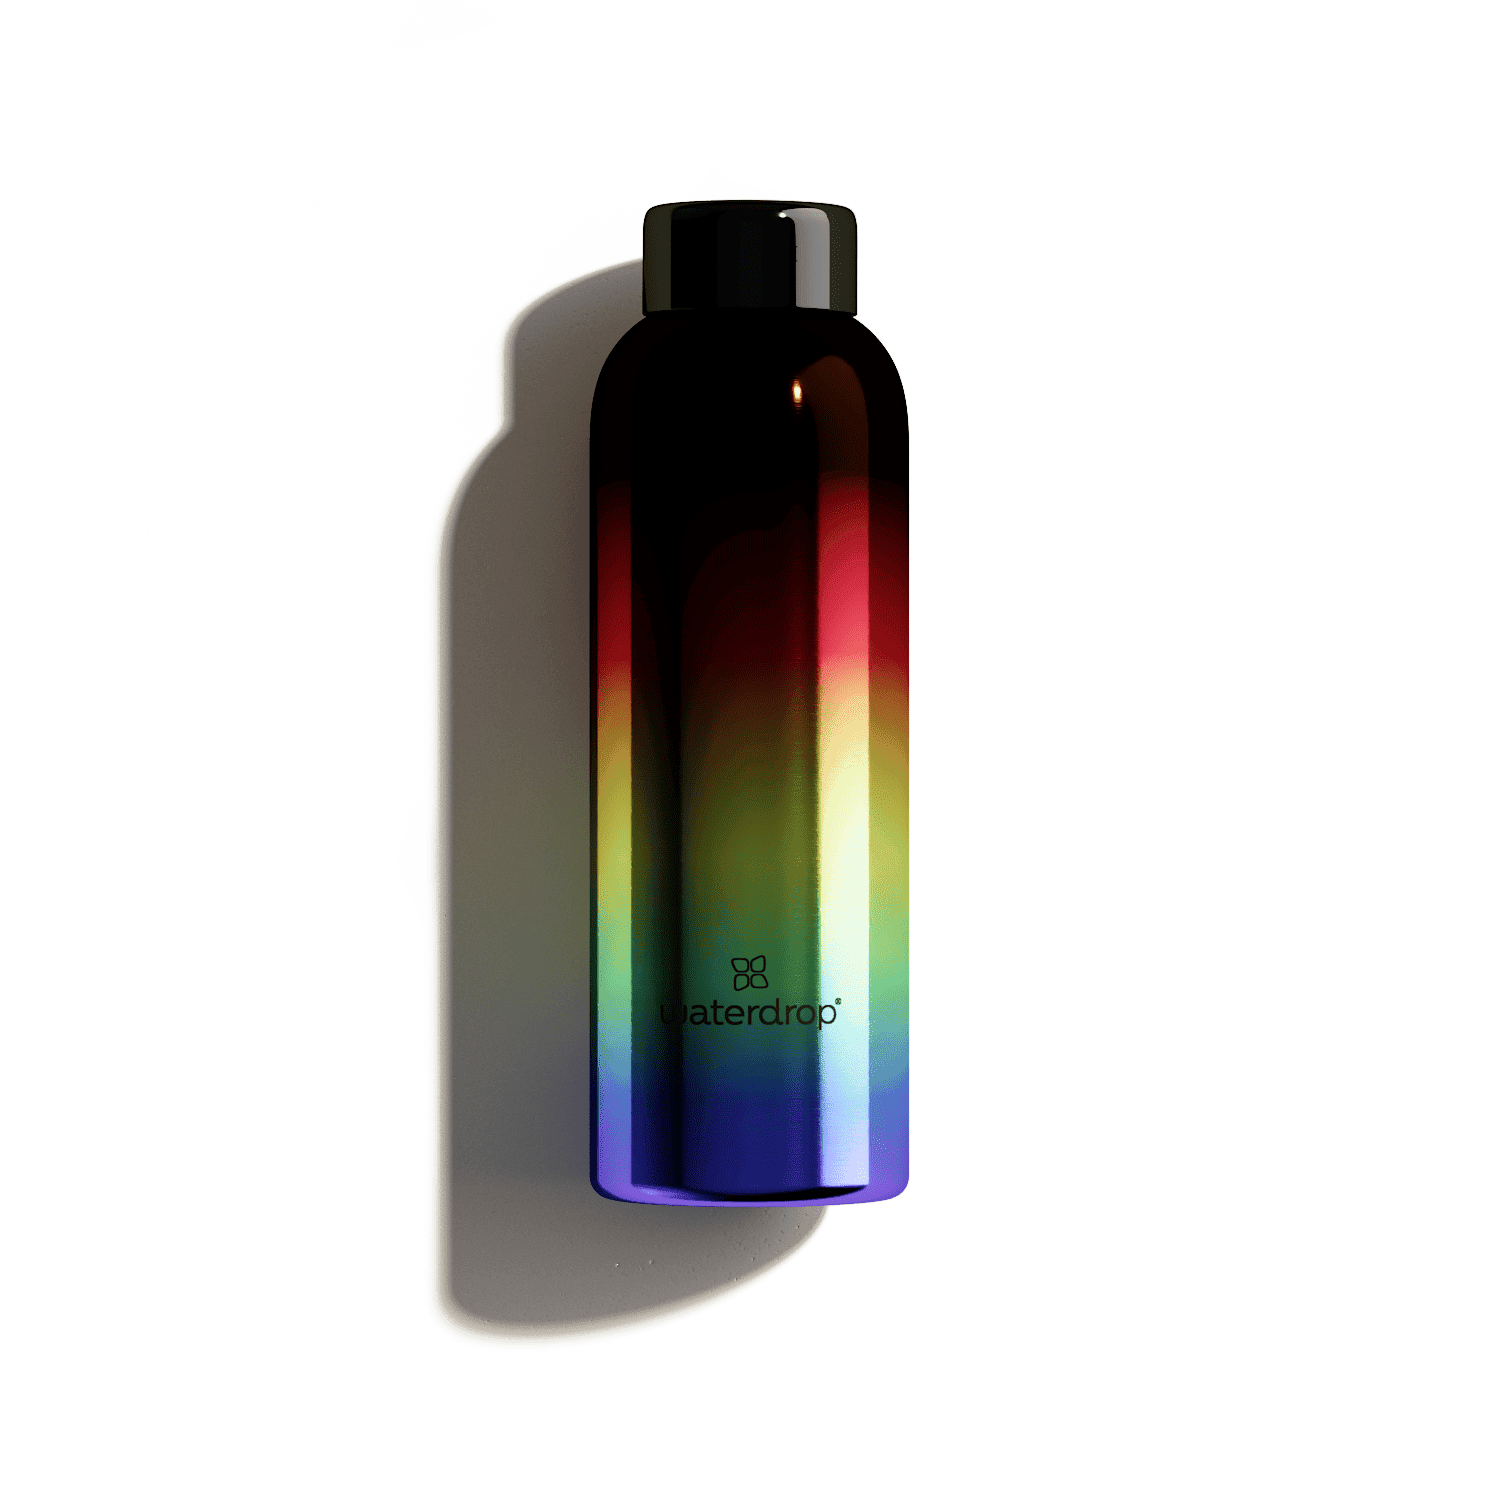 Botella Orgullo 2022 Waterdrop